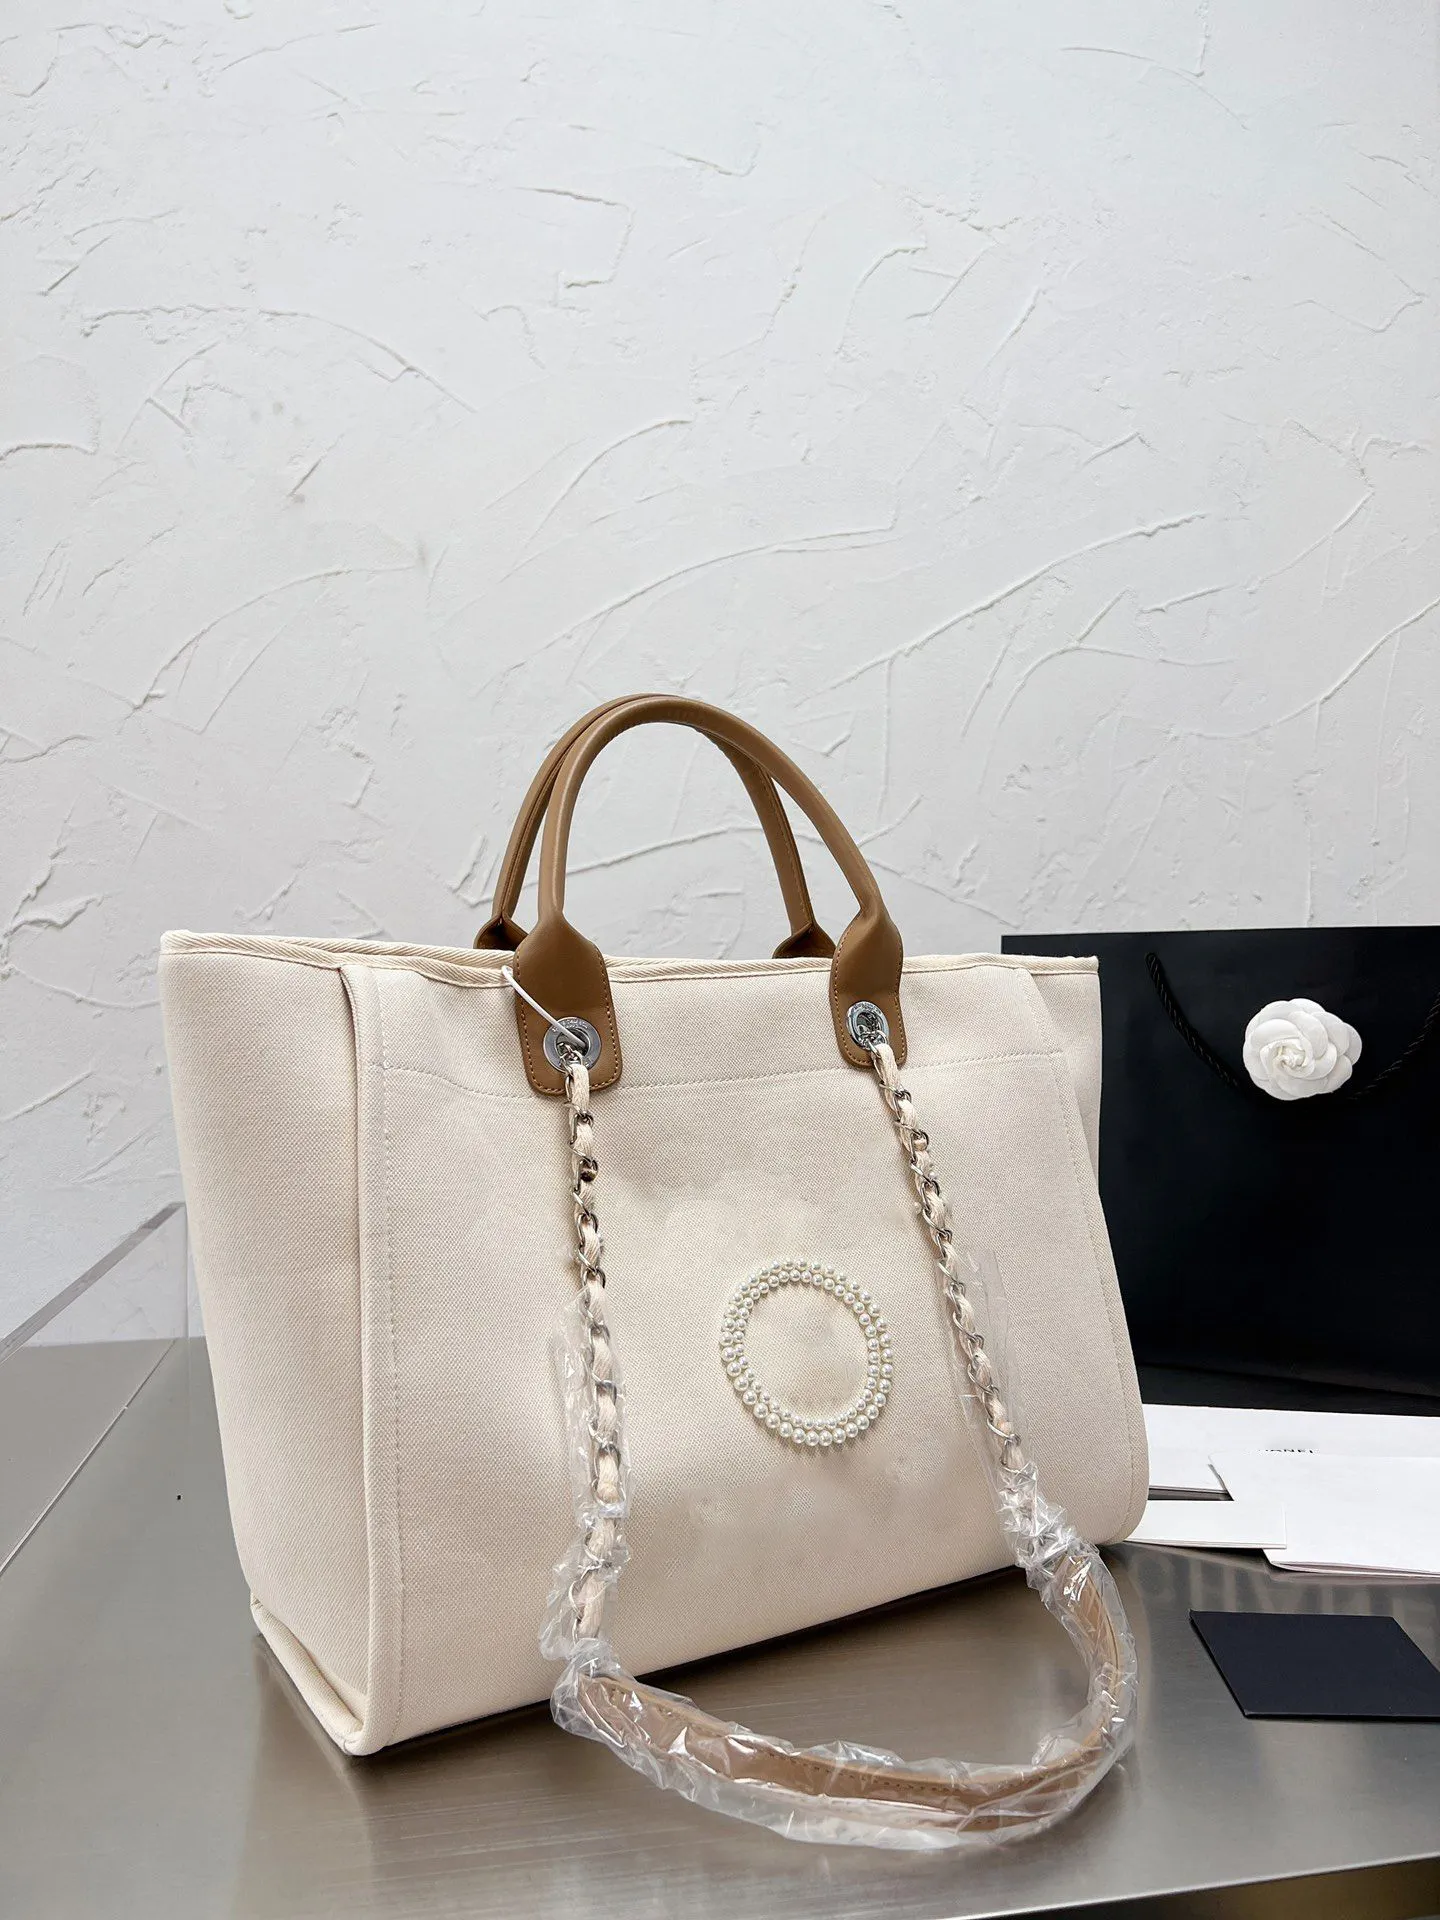 CC woman bag genuine leather cosmetic handbag case tote